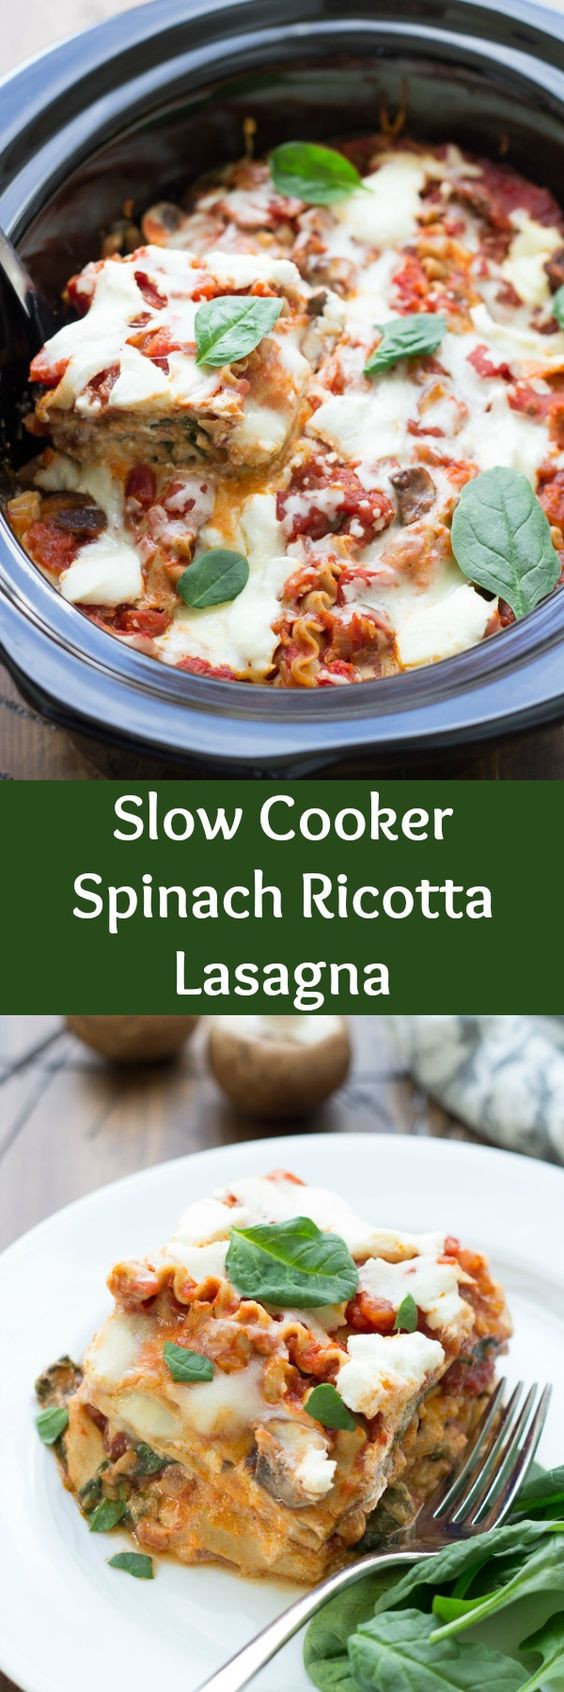 Slow Cooker Spinach Lasagna
 Slow Cooker Spinach Ricotta Lasagna Recipe